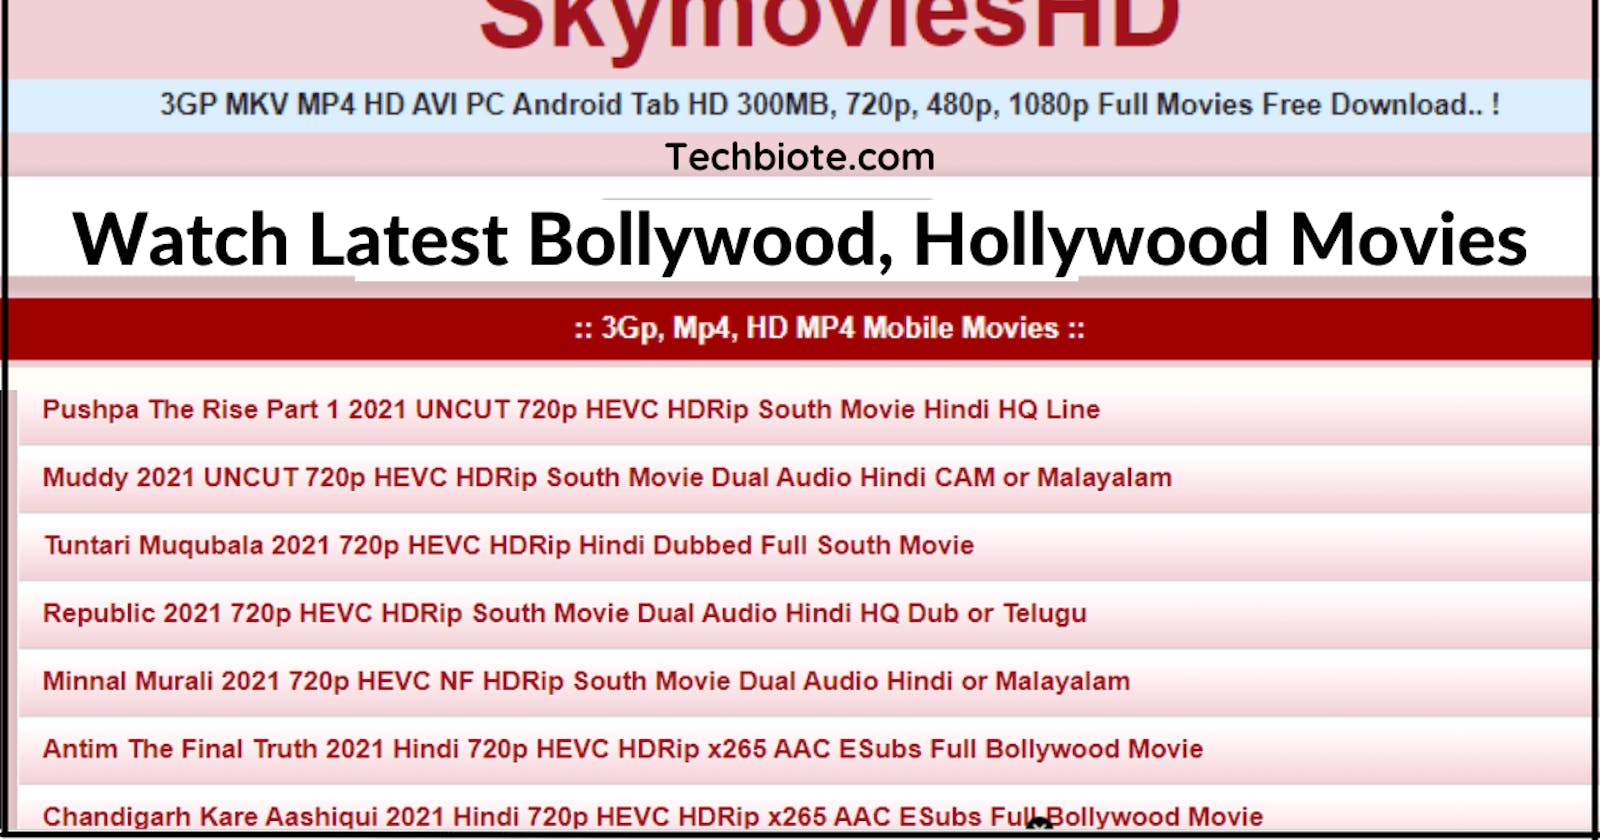 SkymoviesHD | Watch Latest Bollywood, Hollywood Movies